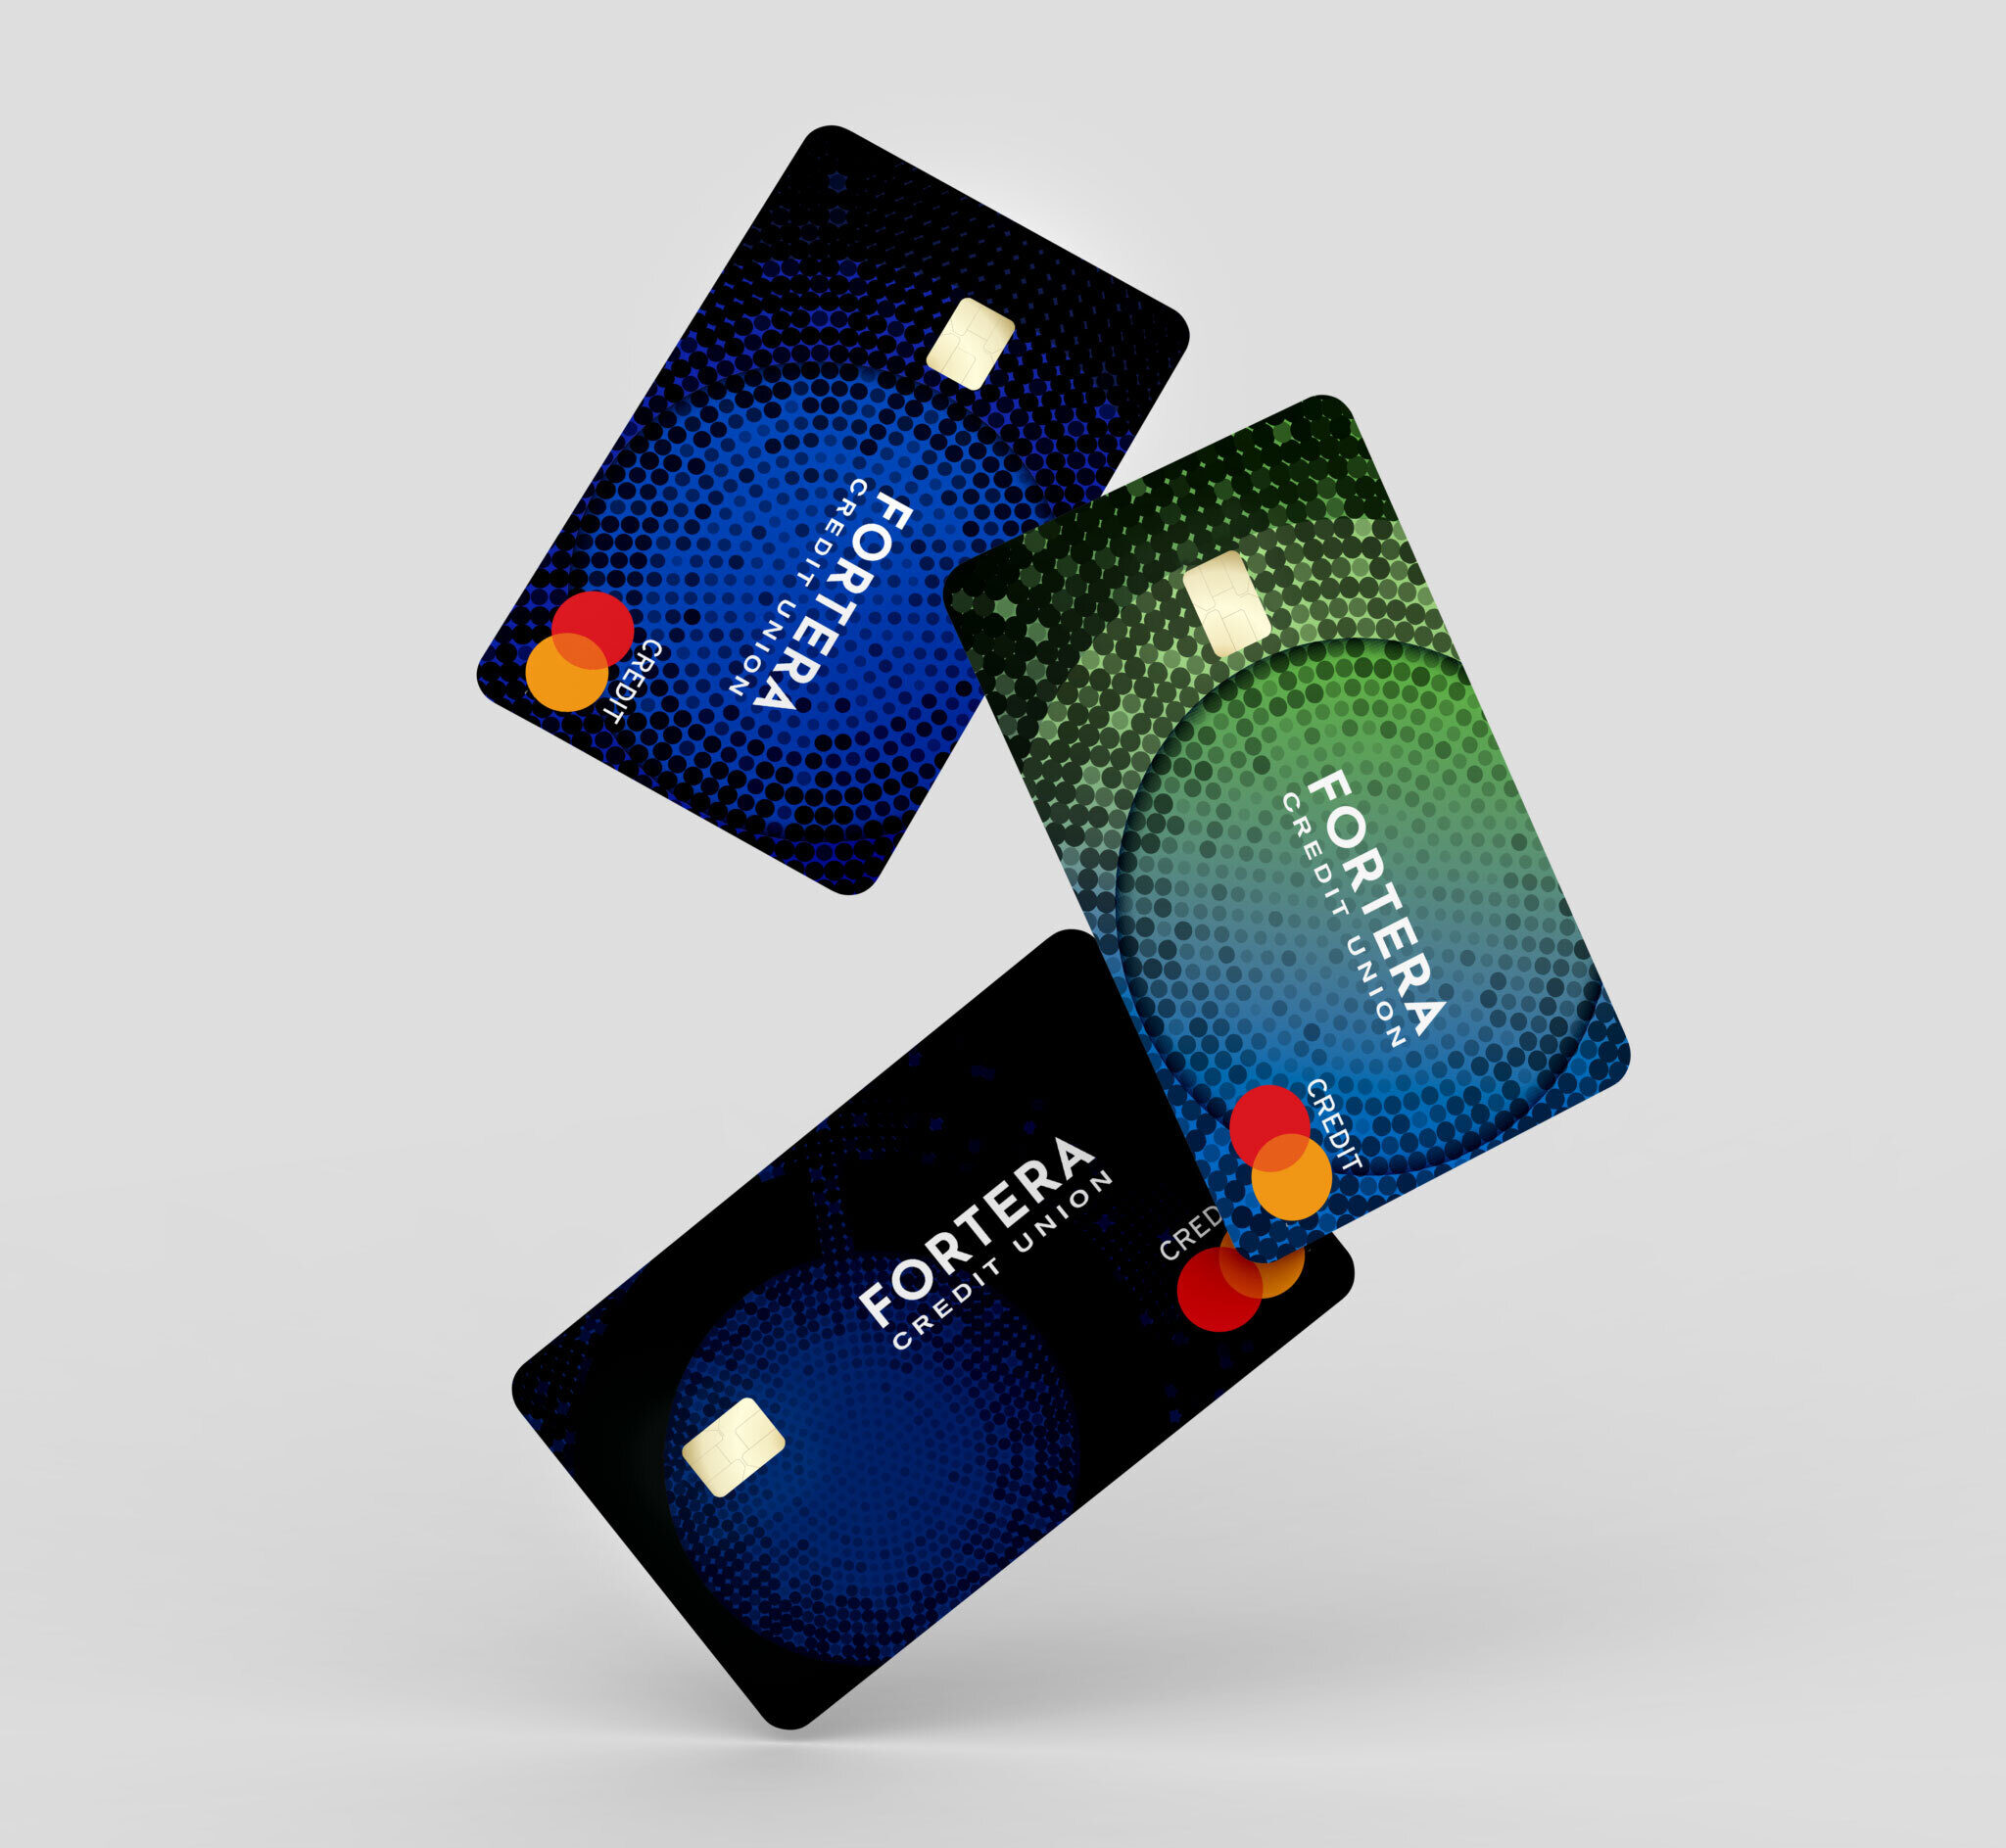 Multiple Fortera Credit Cards Floating